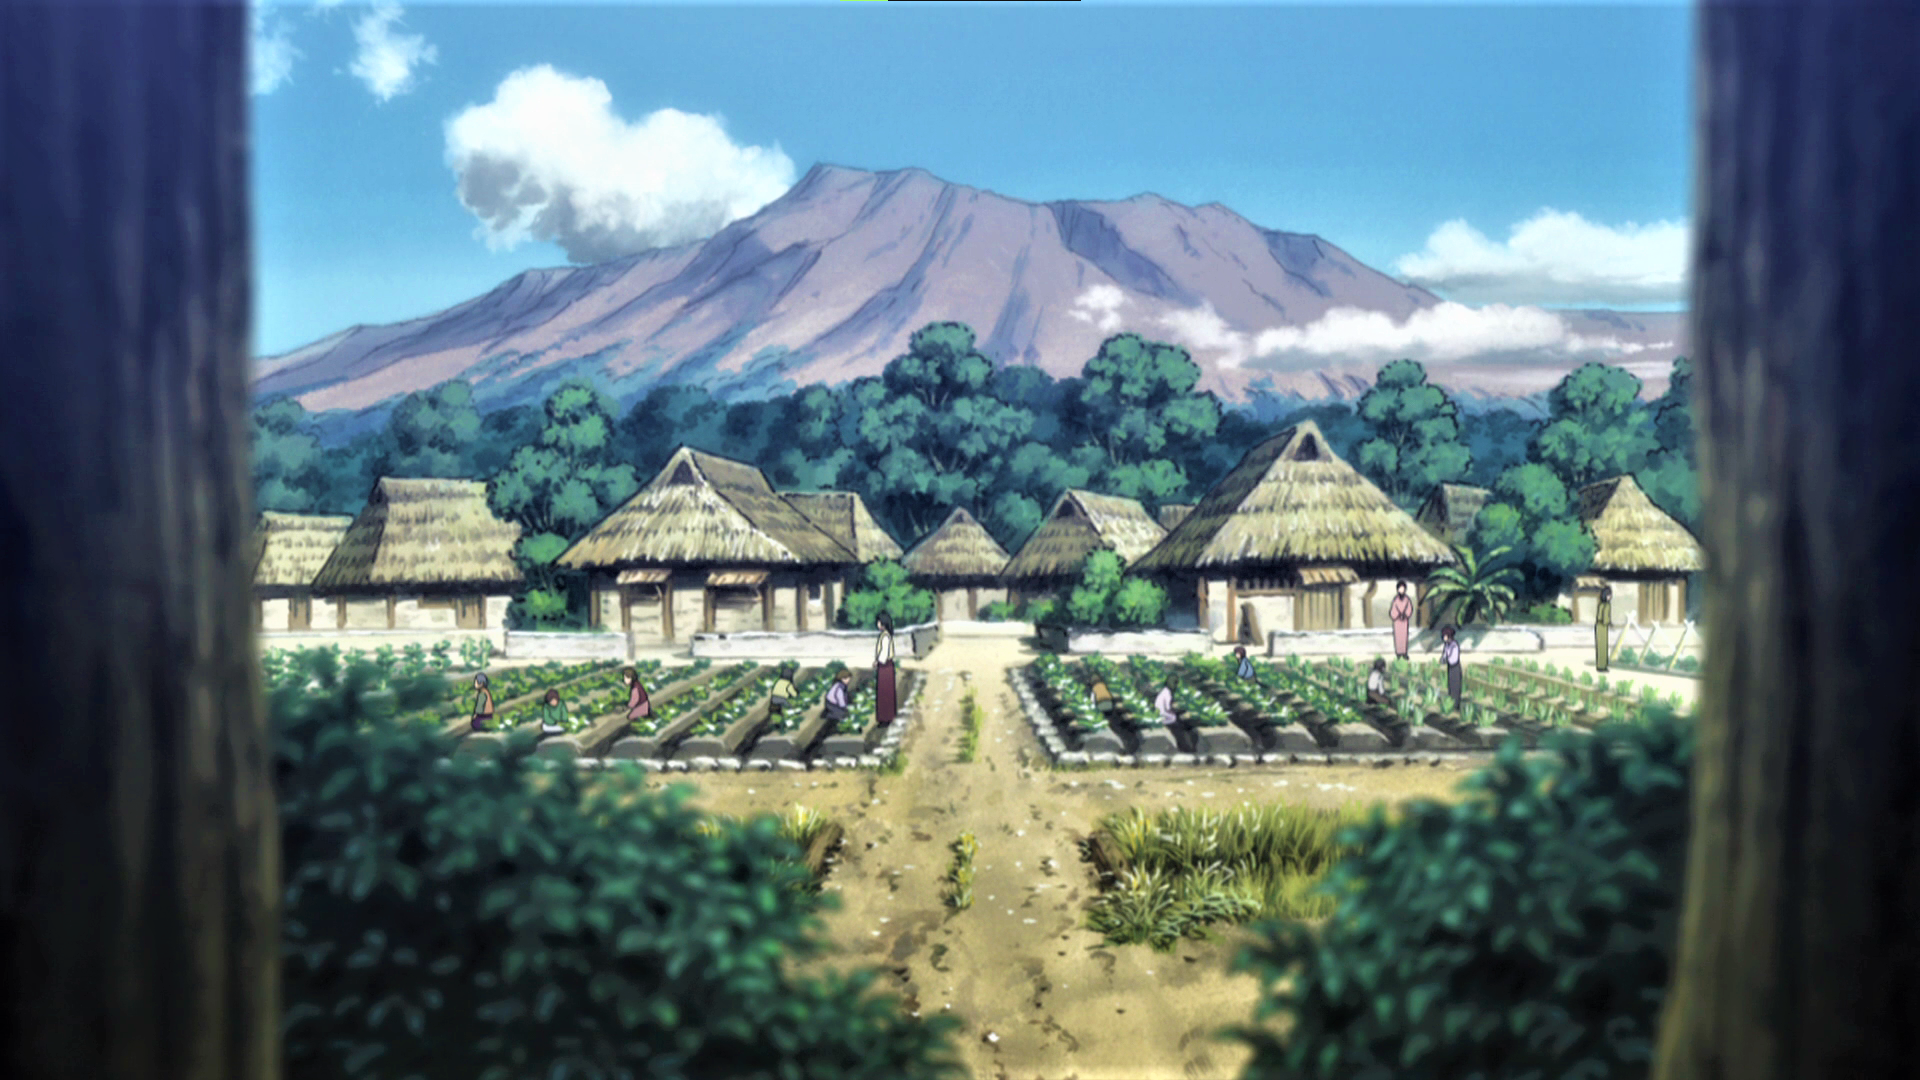 Anime 1920x1080 Hunter x Hunter house trees mountains clouds sky field anime Anime screenshot